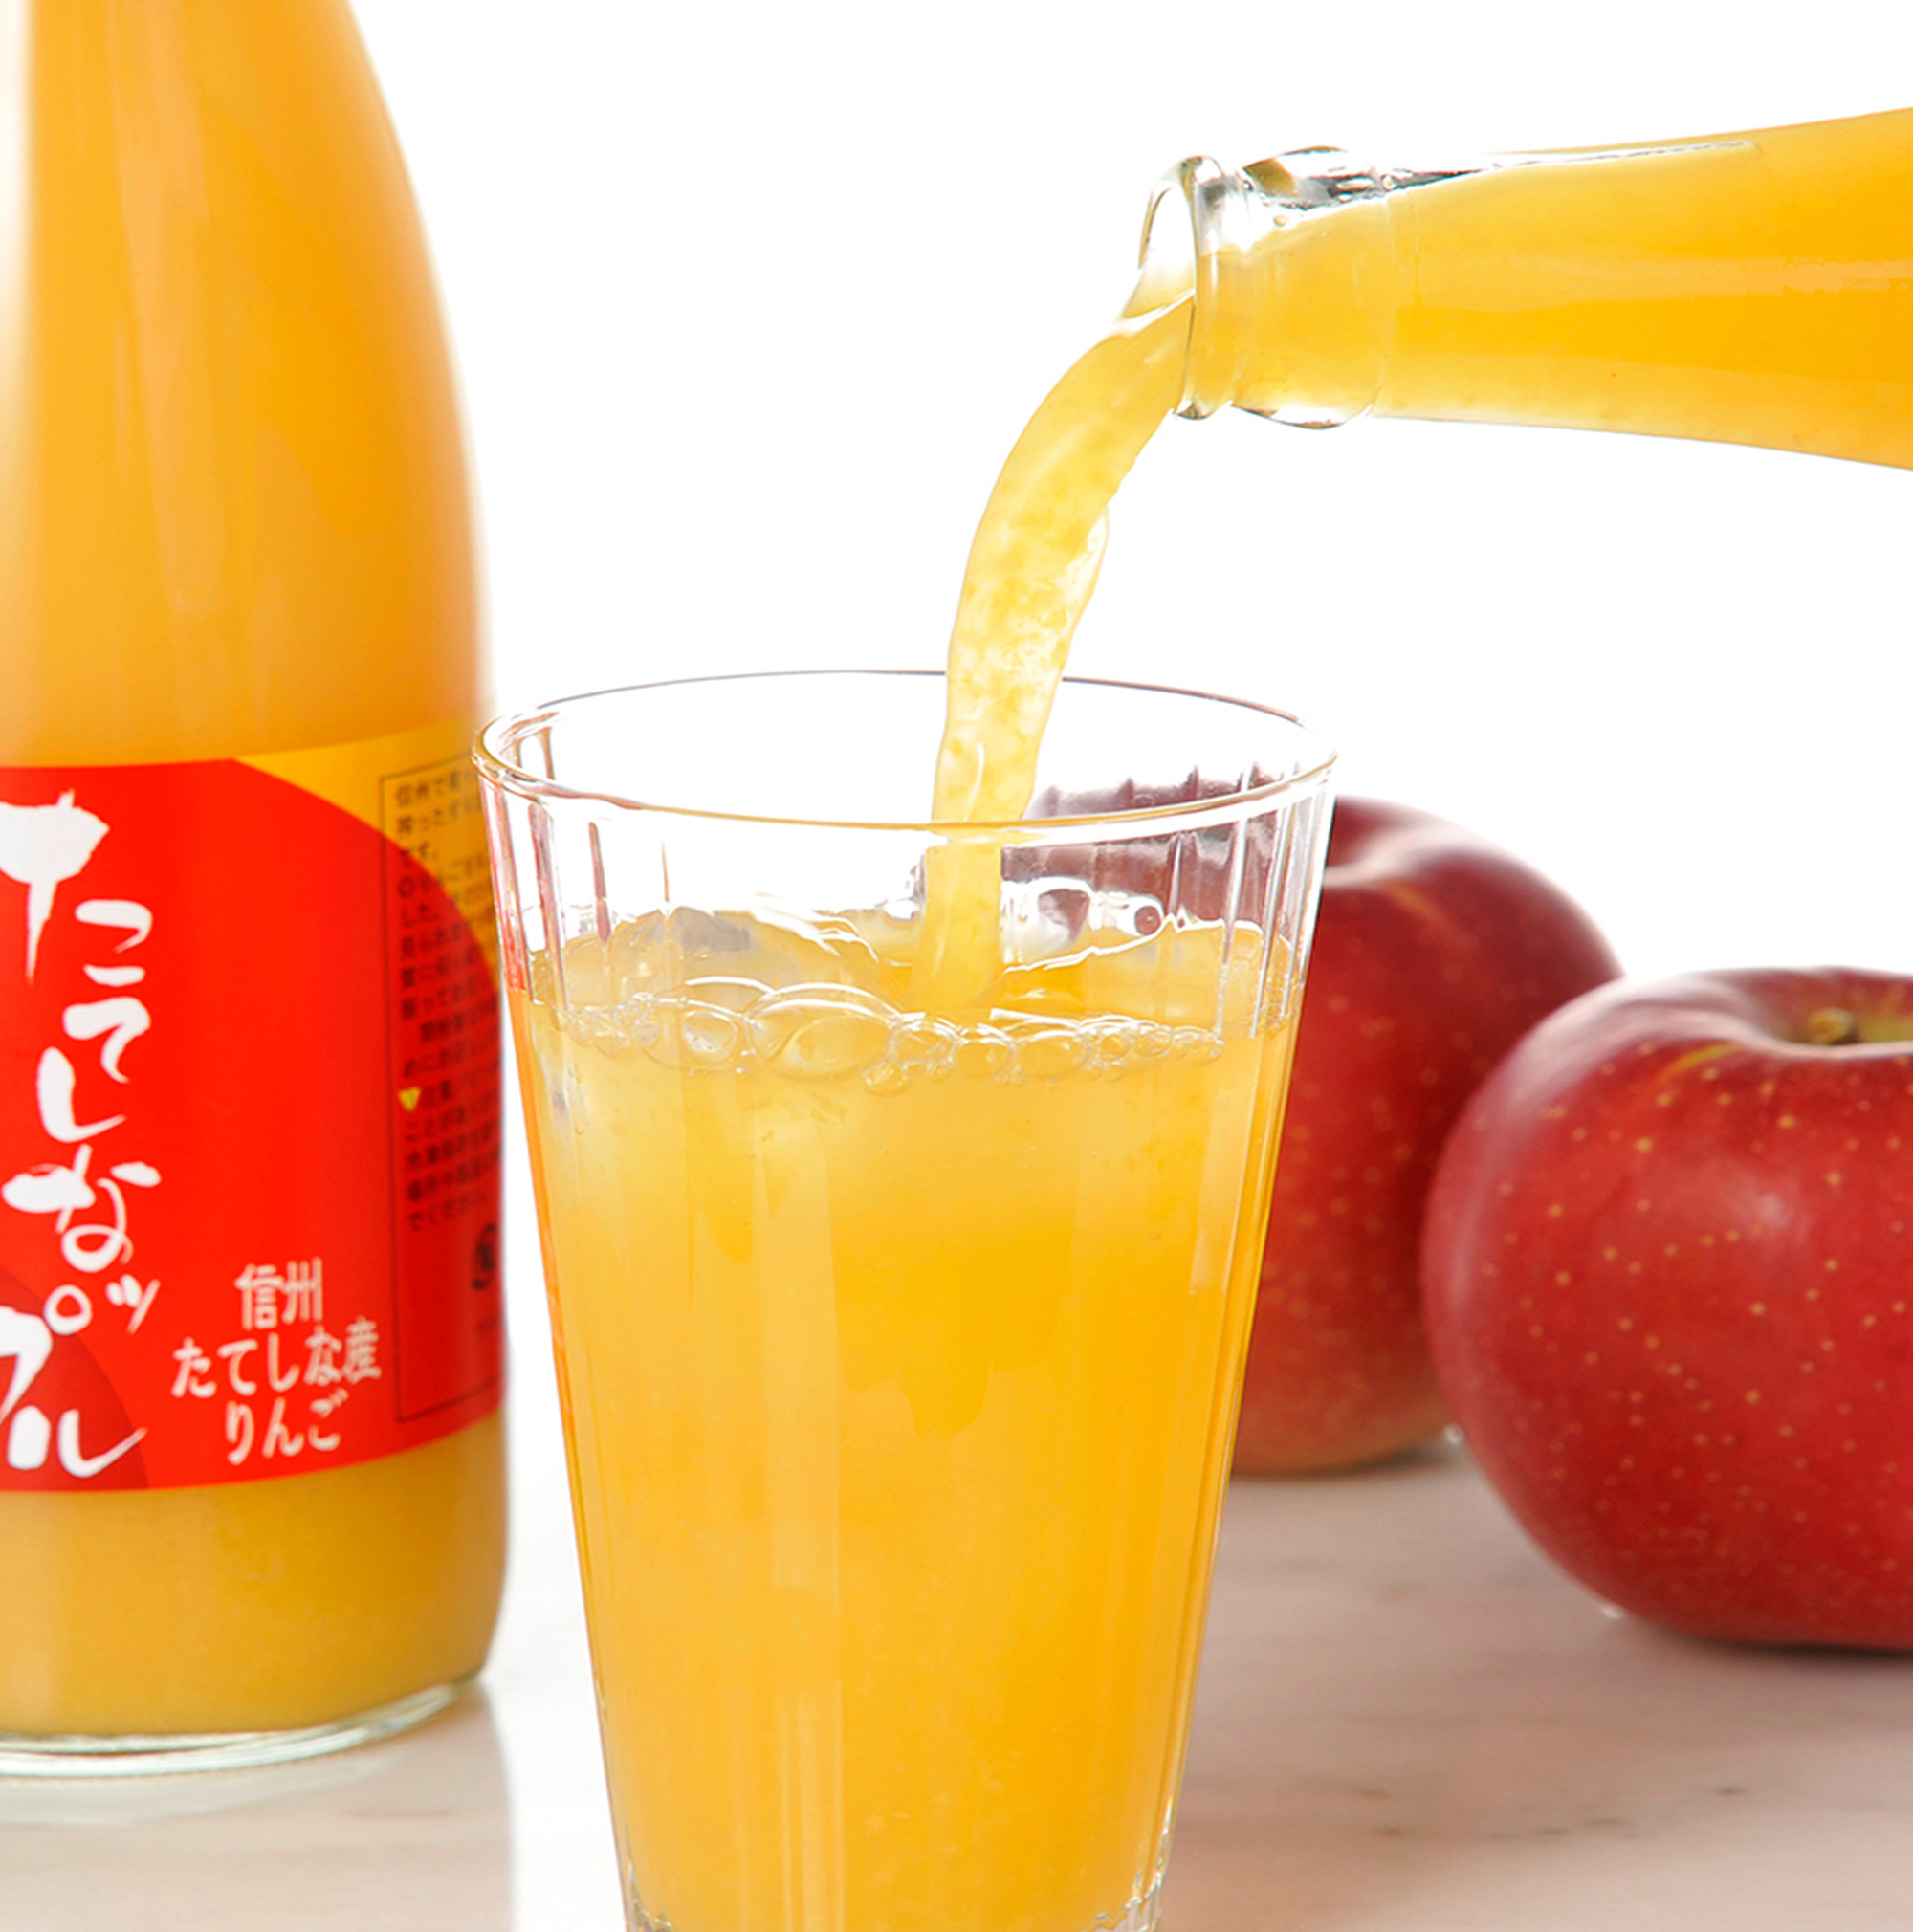 Fuji apples *seconds* *not organic* 5 kilo box – Nagano, Naturally